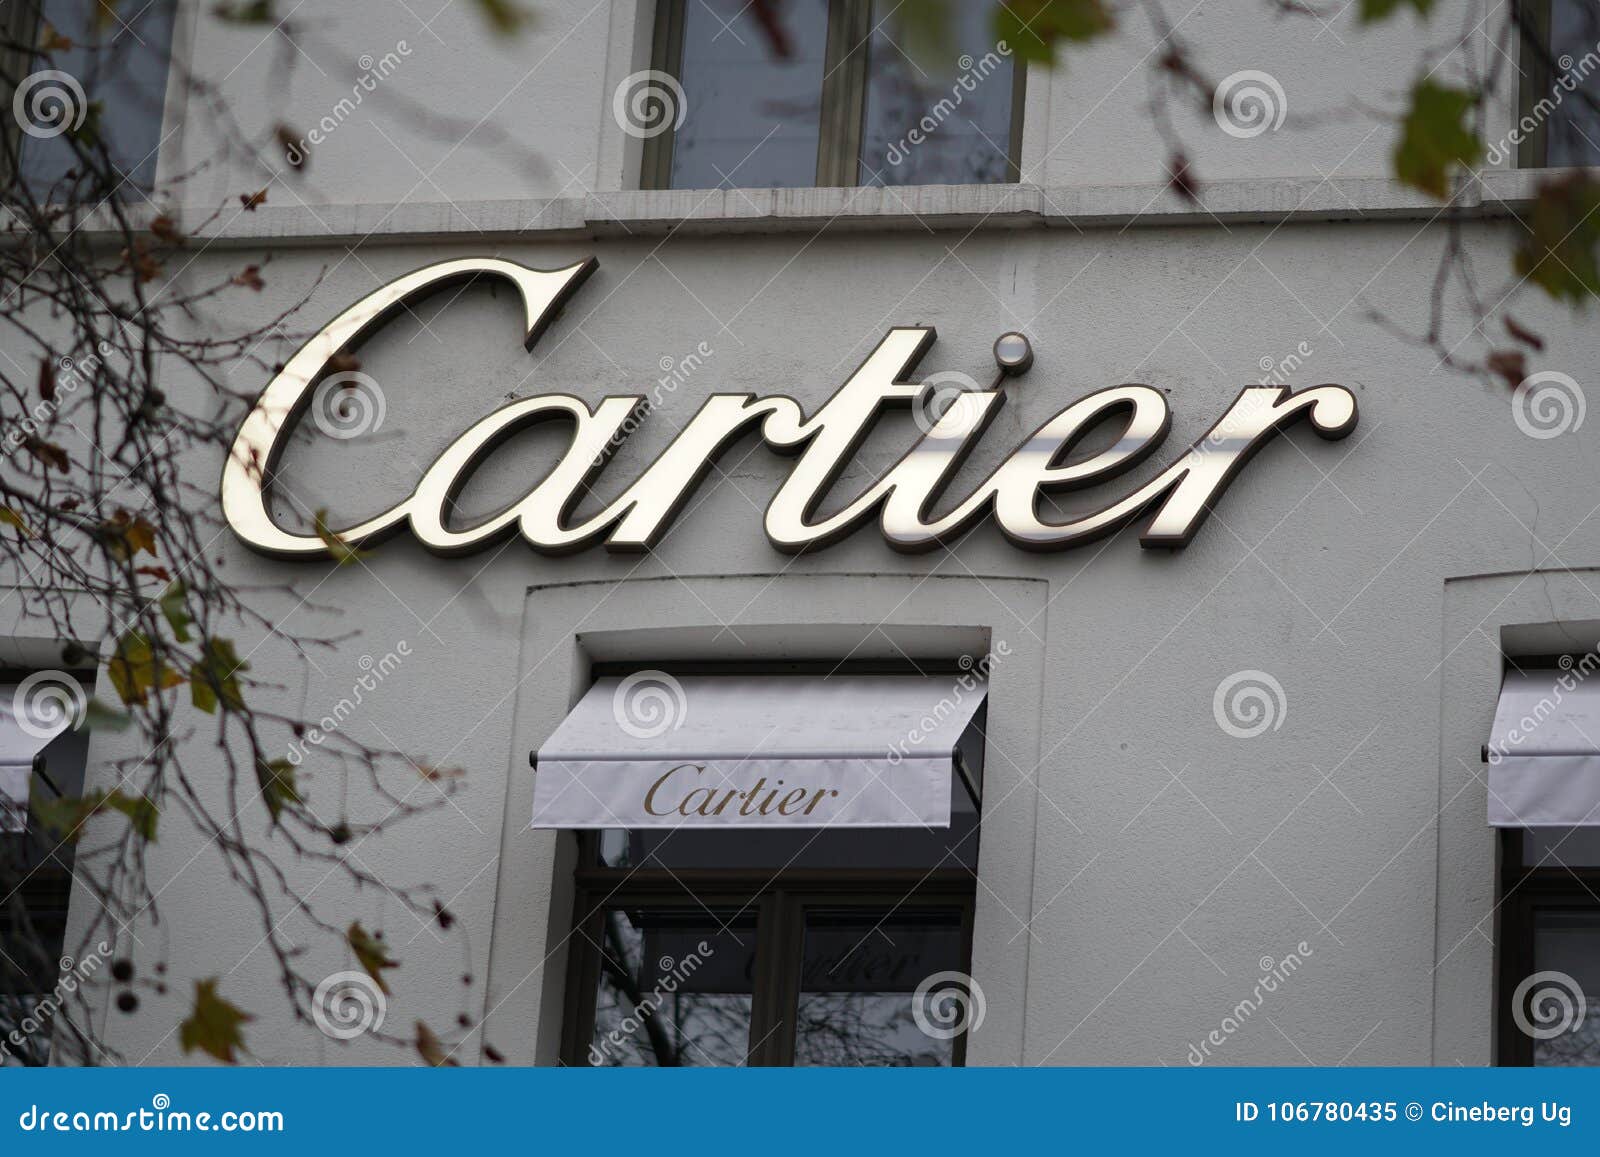 cartier logo 2017